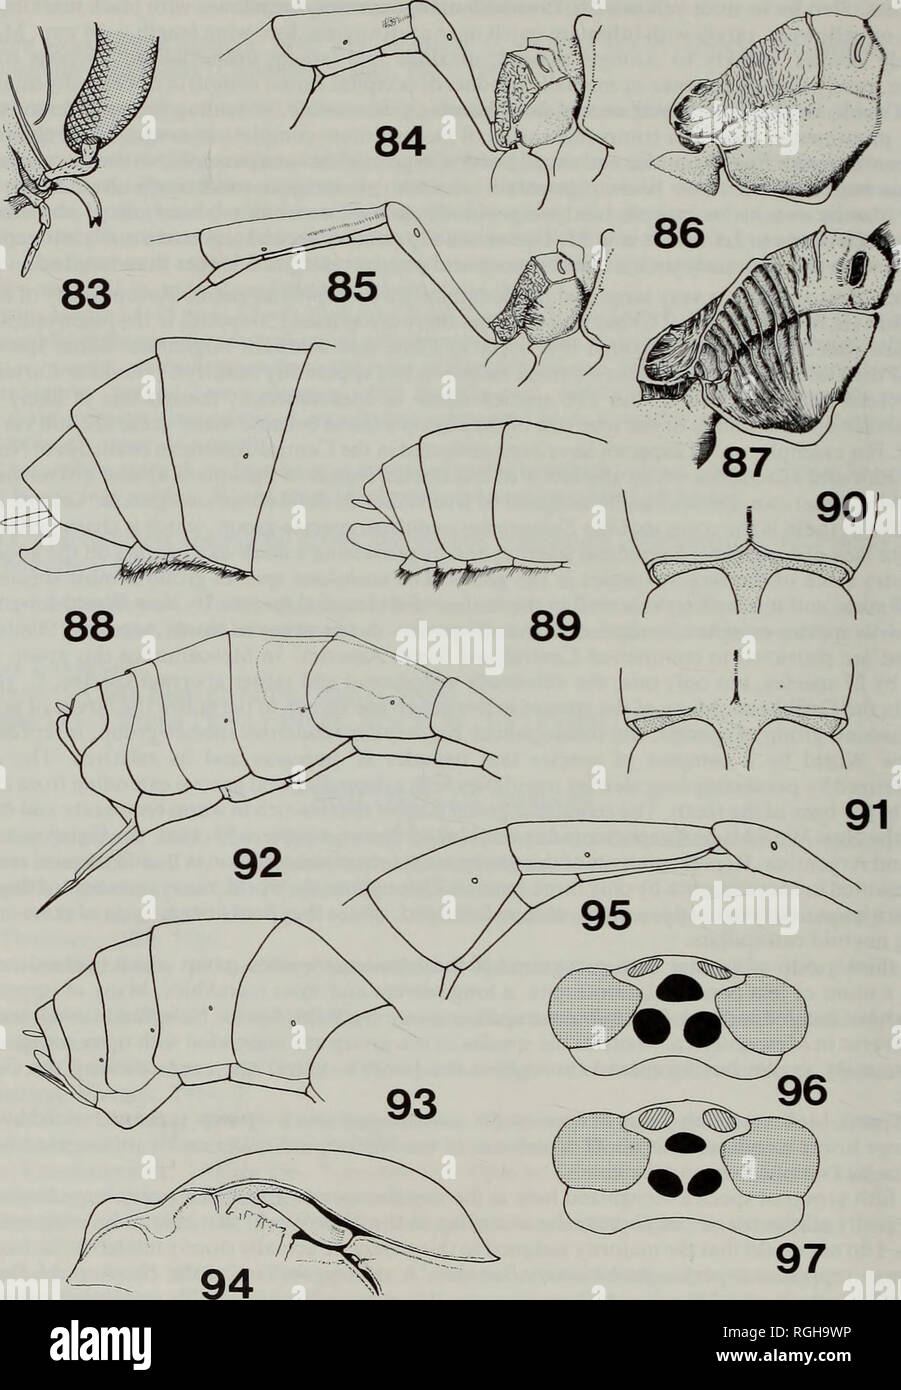 . Bulletin of the British Museum (Natural History) Entomology. 76 IAN D. GAULD. Figs 83-97 Enicospilus species. 83, E. bozai, posteroventral region of head. 84-85, propodeum and base of gaster, lateral view; (84) E. enigmus; (85) E. chaconi. 86,87, propodeum, lateral view; (86) E. major; (87) E. clarkorum. 88, 89, terminal segments of gaster of male; (88) E. major; (89) E. clarkorum. 90, 91, posterior region of mesothorax, ventral view; (90) E. mayi; (91) E. chiriquensis. 92, 93, posterior segments of gaster of female; (92) E. exoticus; (93) E. mexicanus. 94, mesoscutum and scutellum in profil Stock Photo